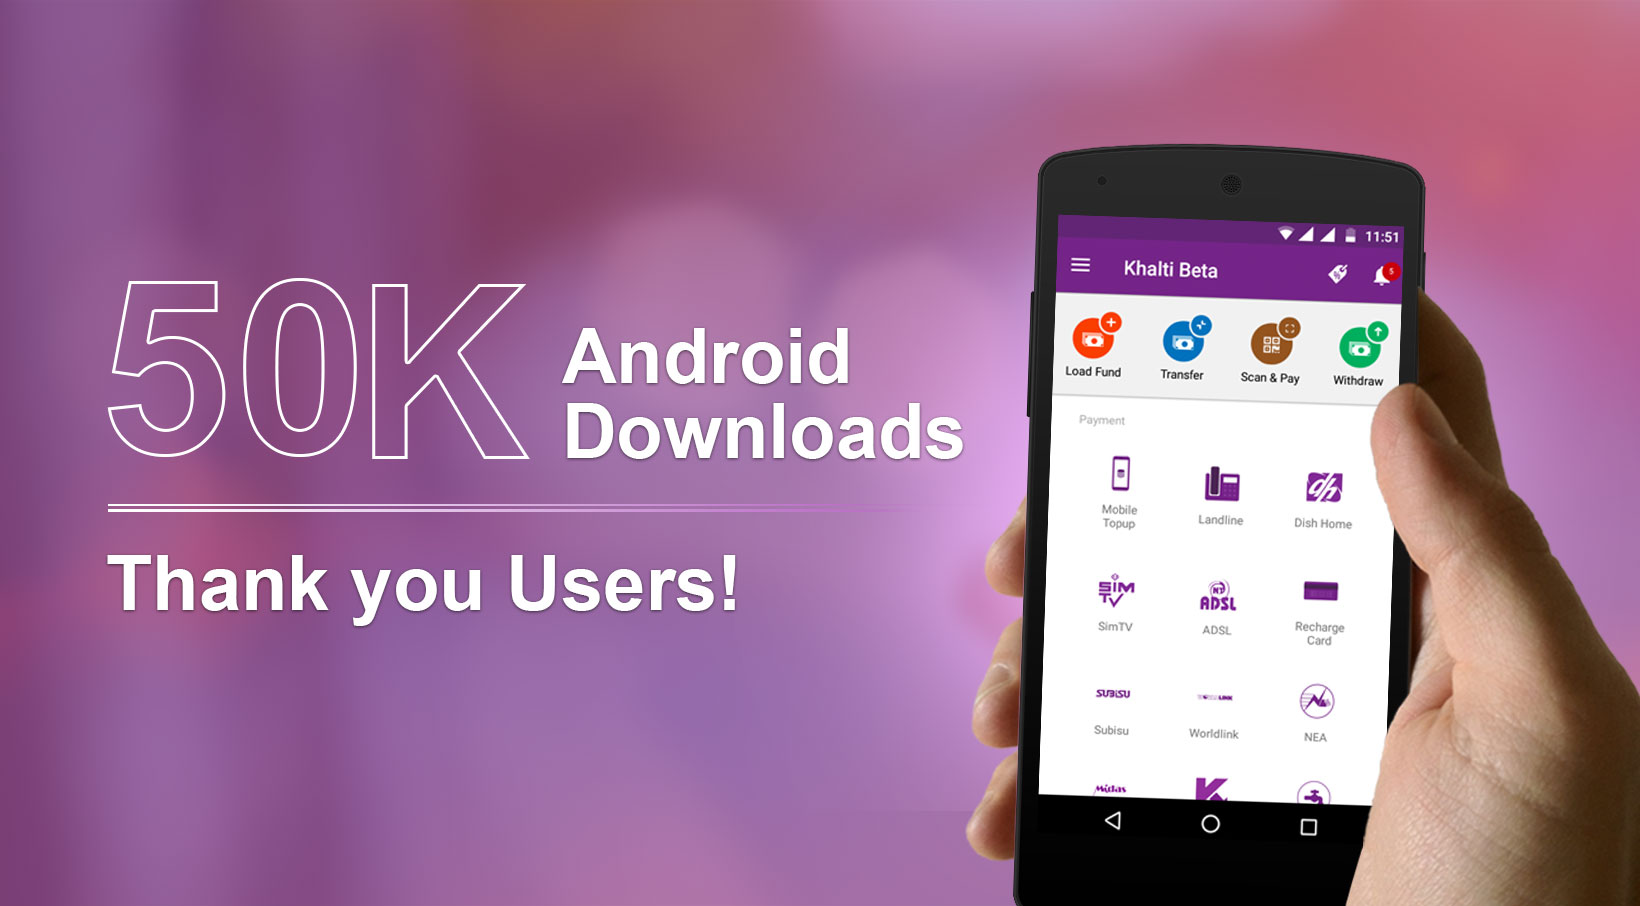 Khalti Digital Wallet app crosses 50 thousand downloads on Google Play